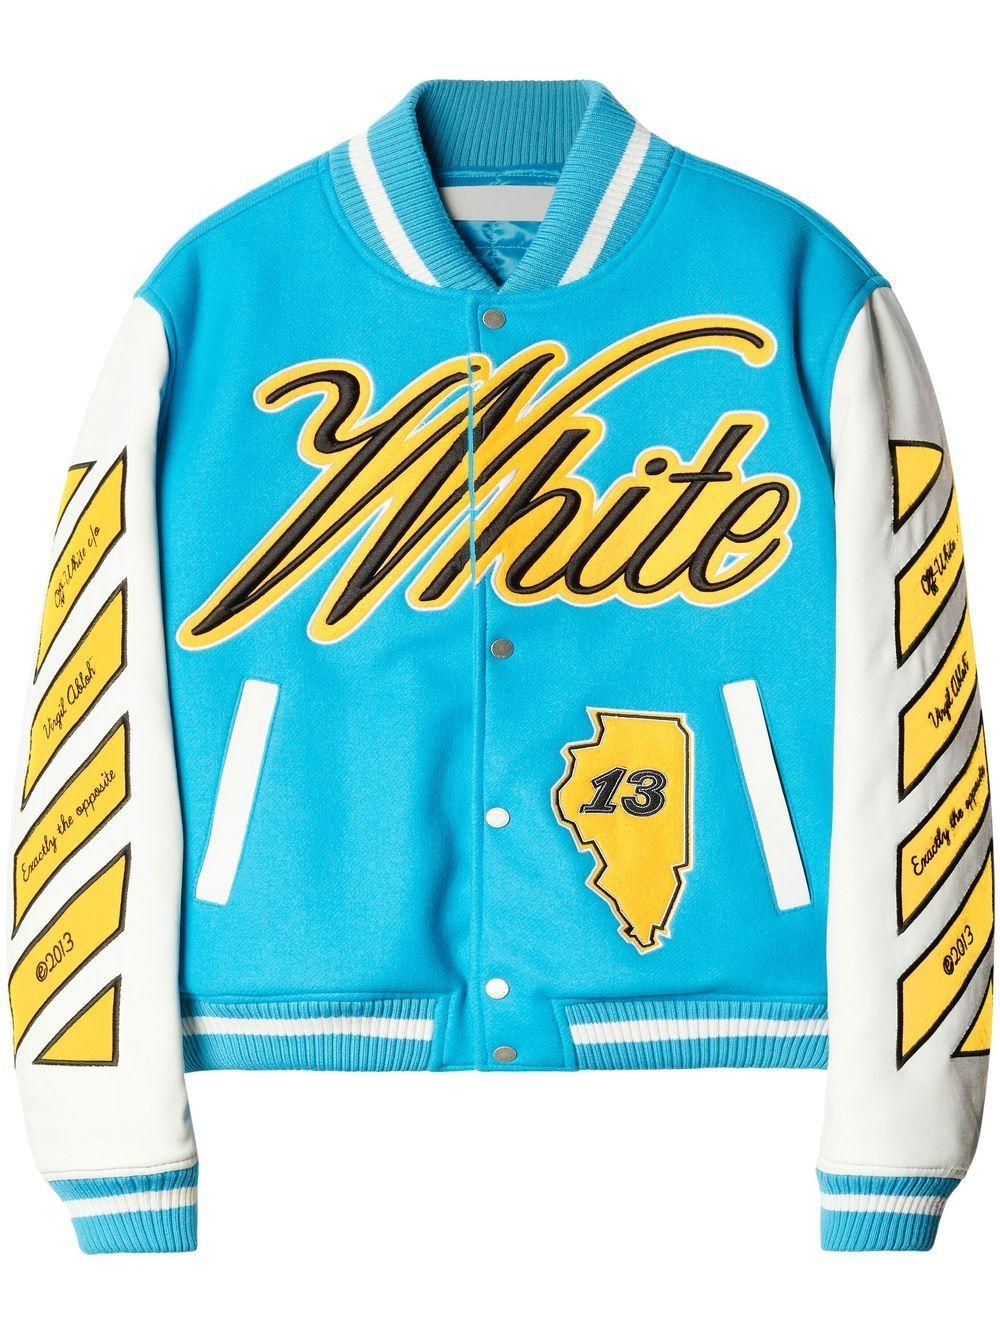 Off-White c/o Virgil Abloh Varsity World Leather Jacket in Blue for Men